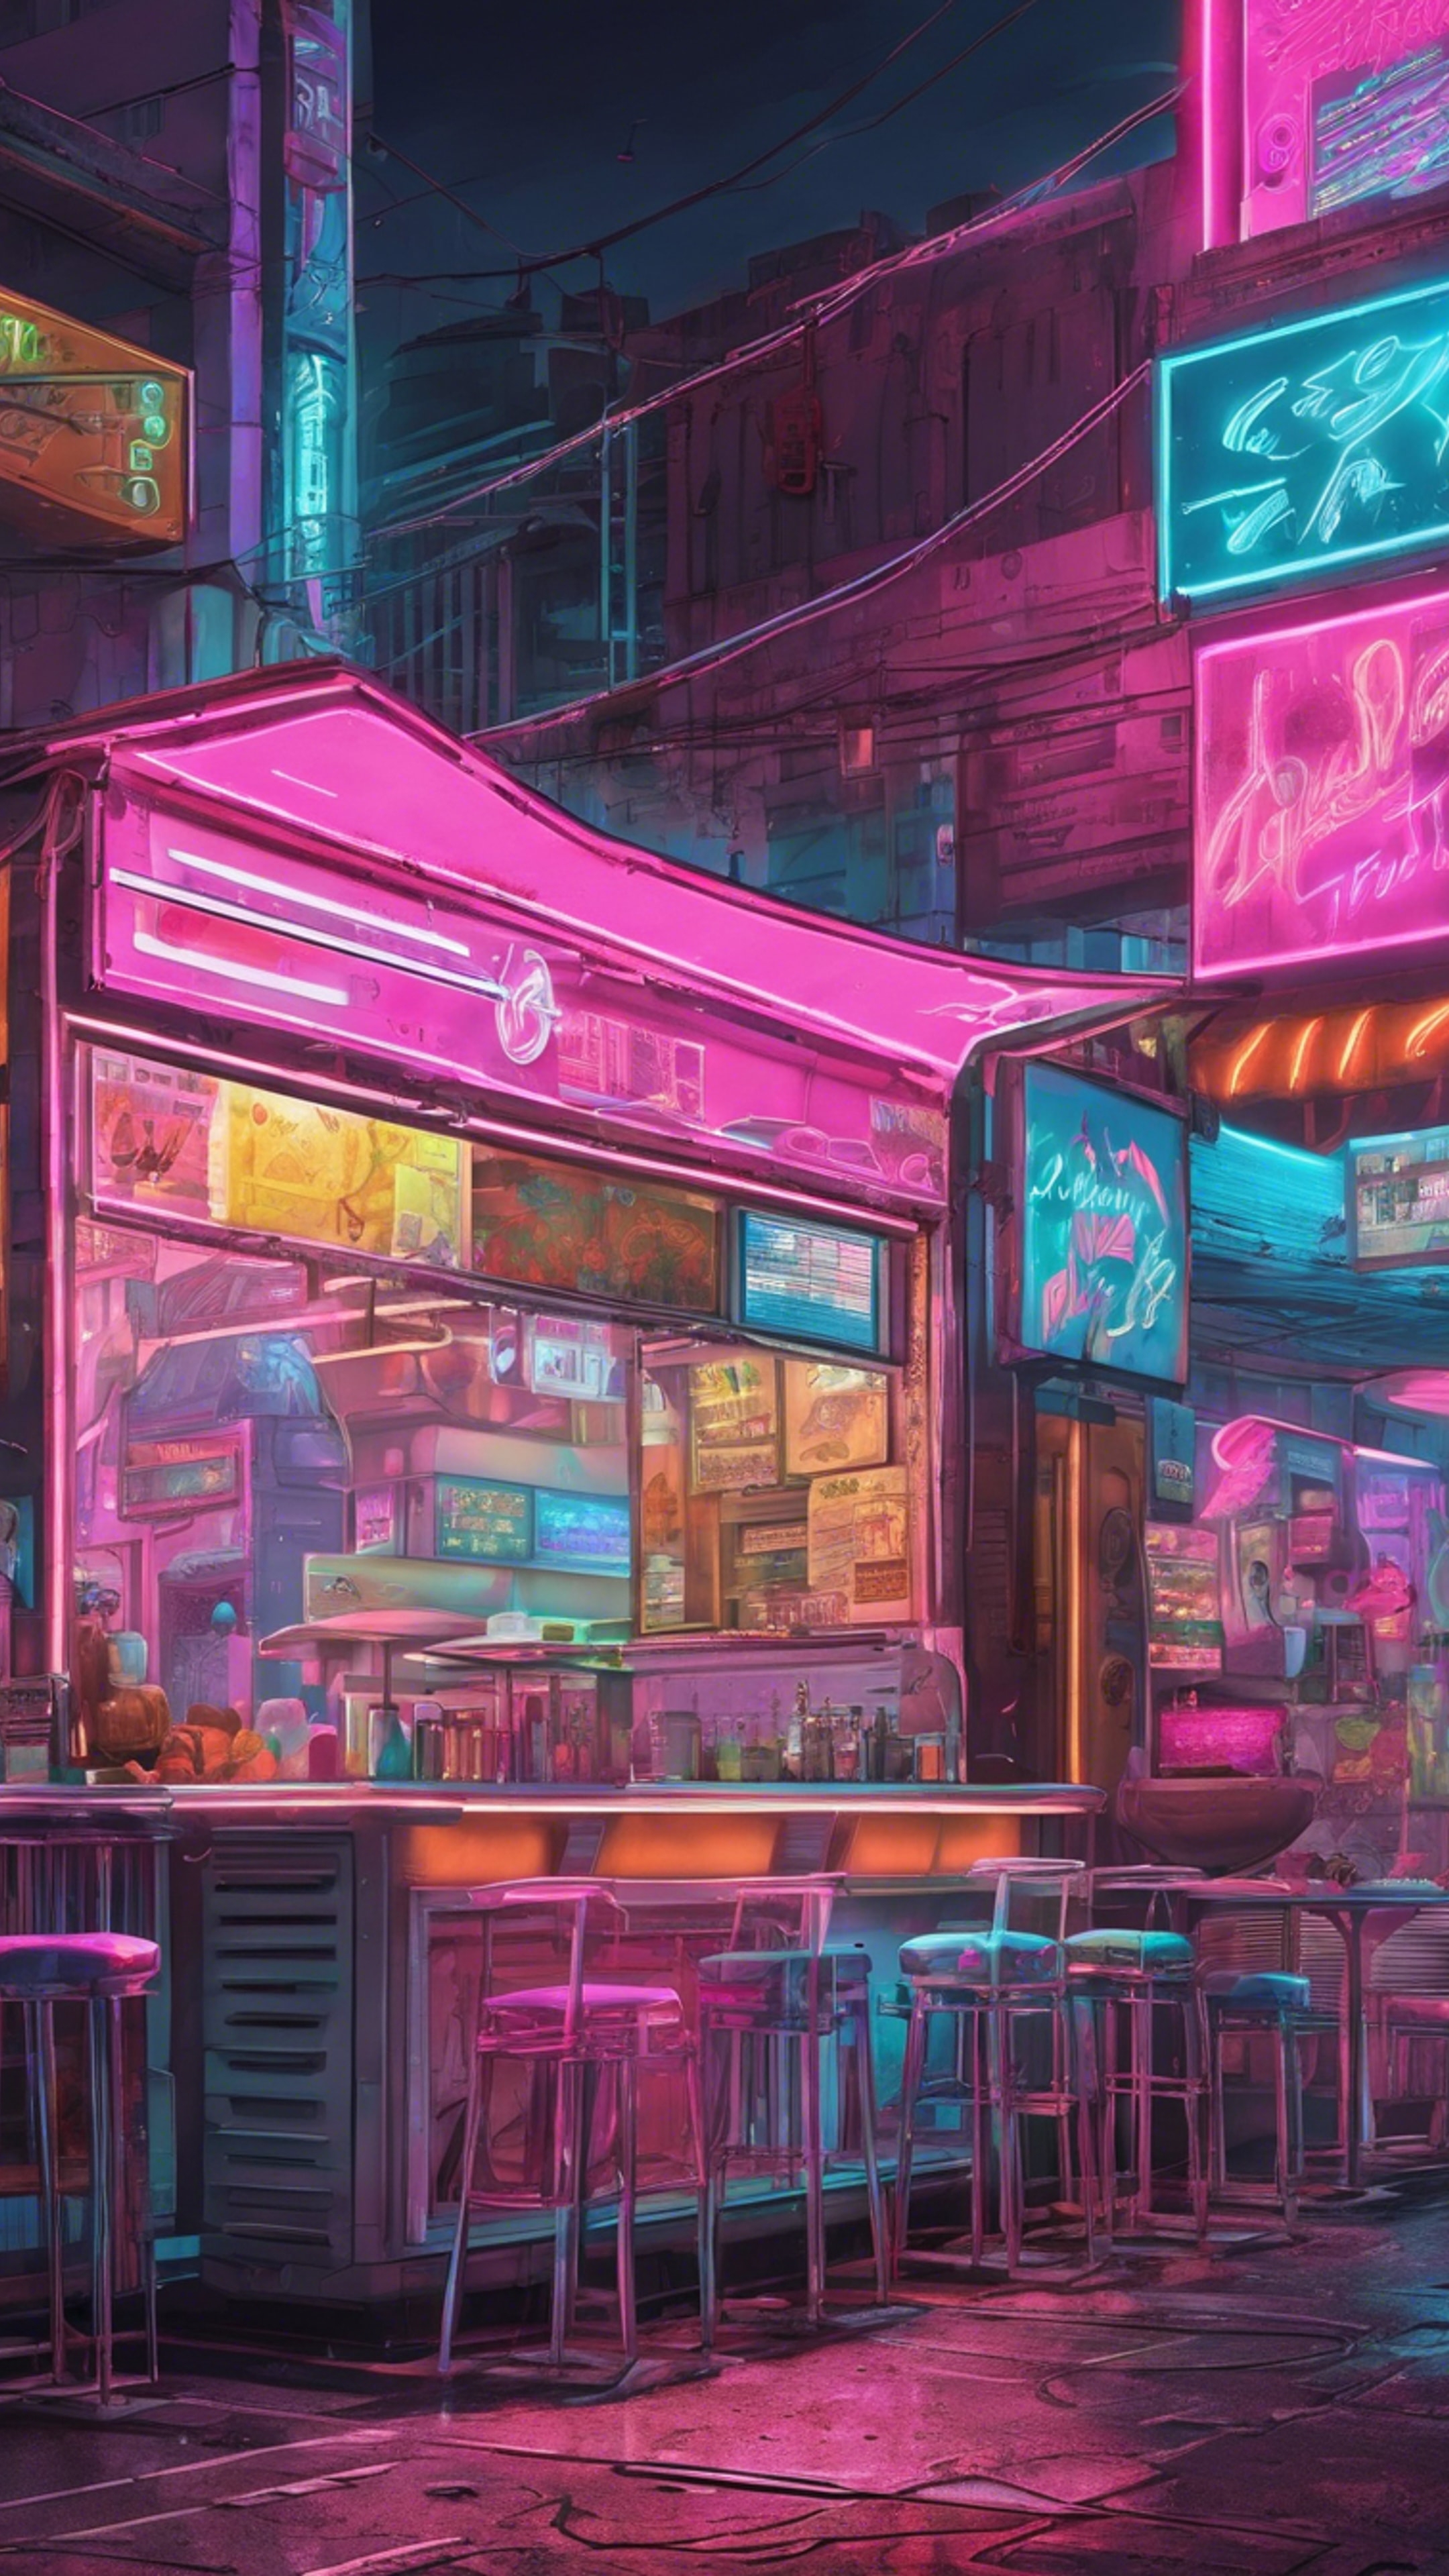 Night scene in a city where cyberpunk meets pastel at a popular street food stall. Tapet[607f993b19214cf28e30]